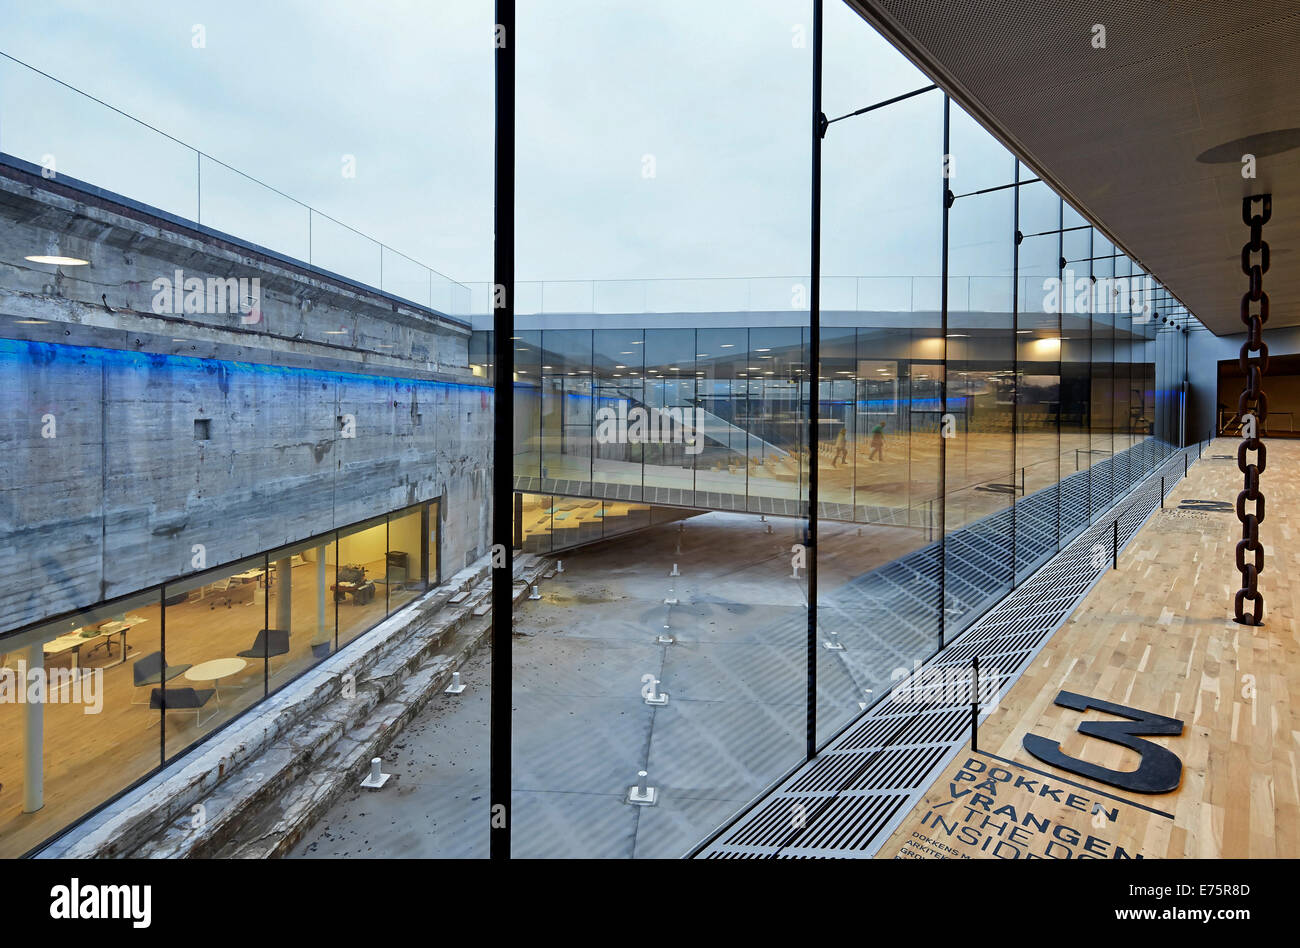 Danish Maritime Museum (M/S Museet for Sofart), Helsingor, Denmark. Architect: Bjarke Ingels Group (BIG), 2013. Views through gl Stock Photo